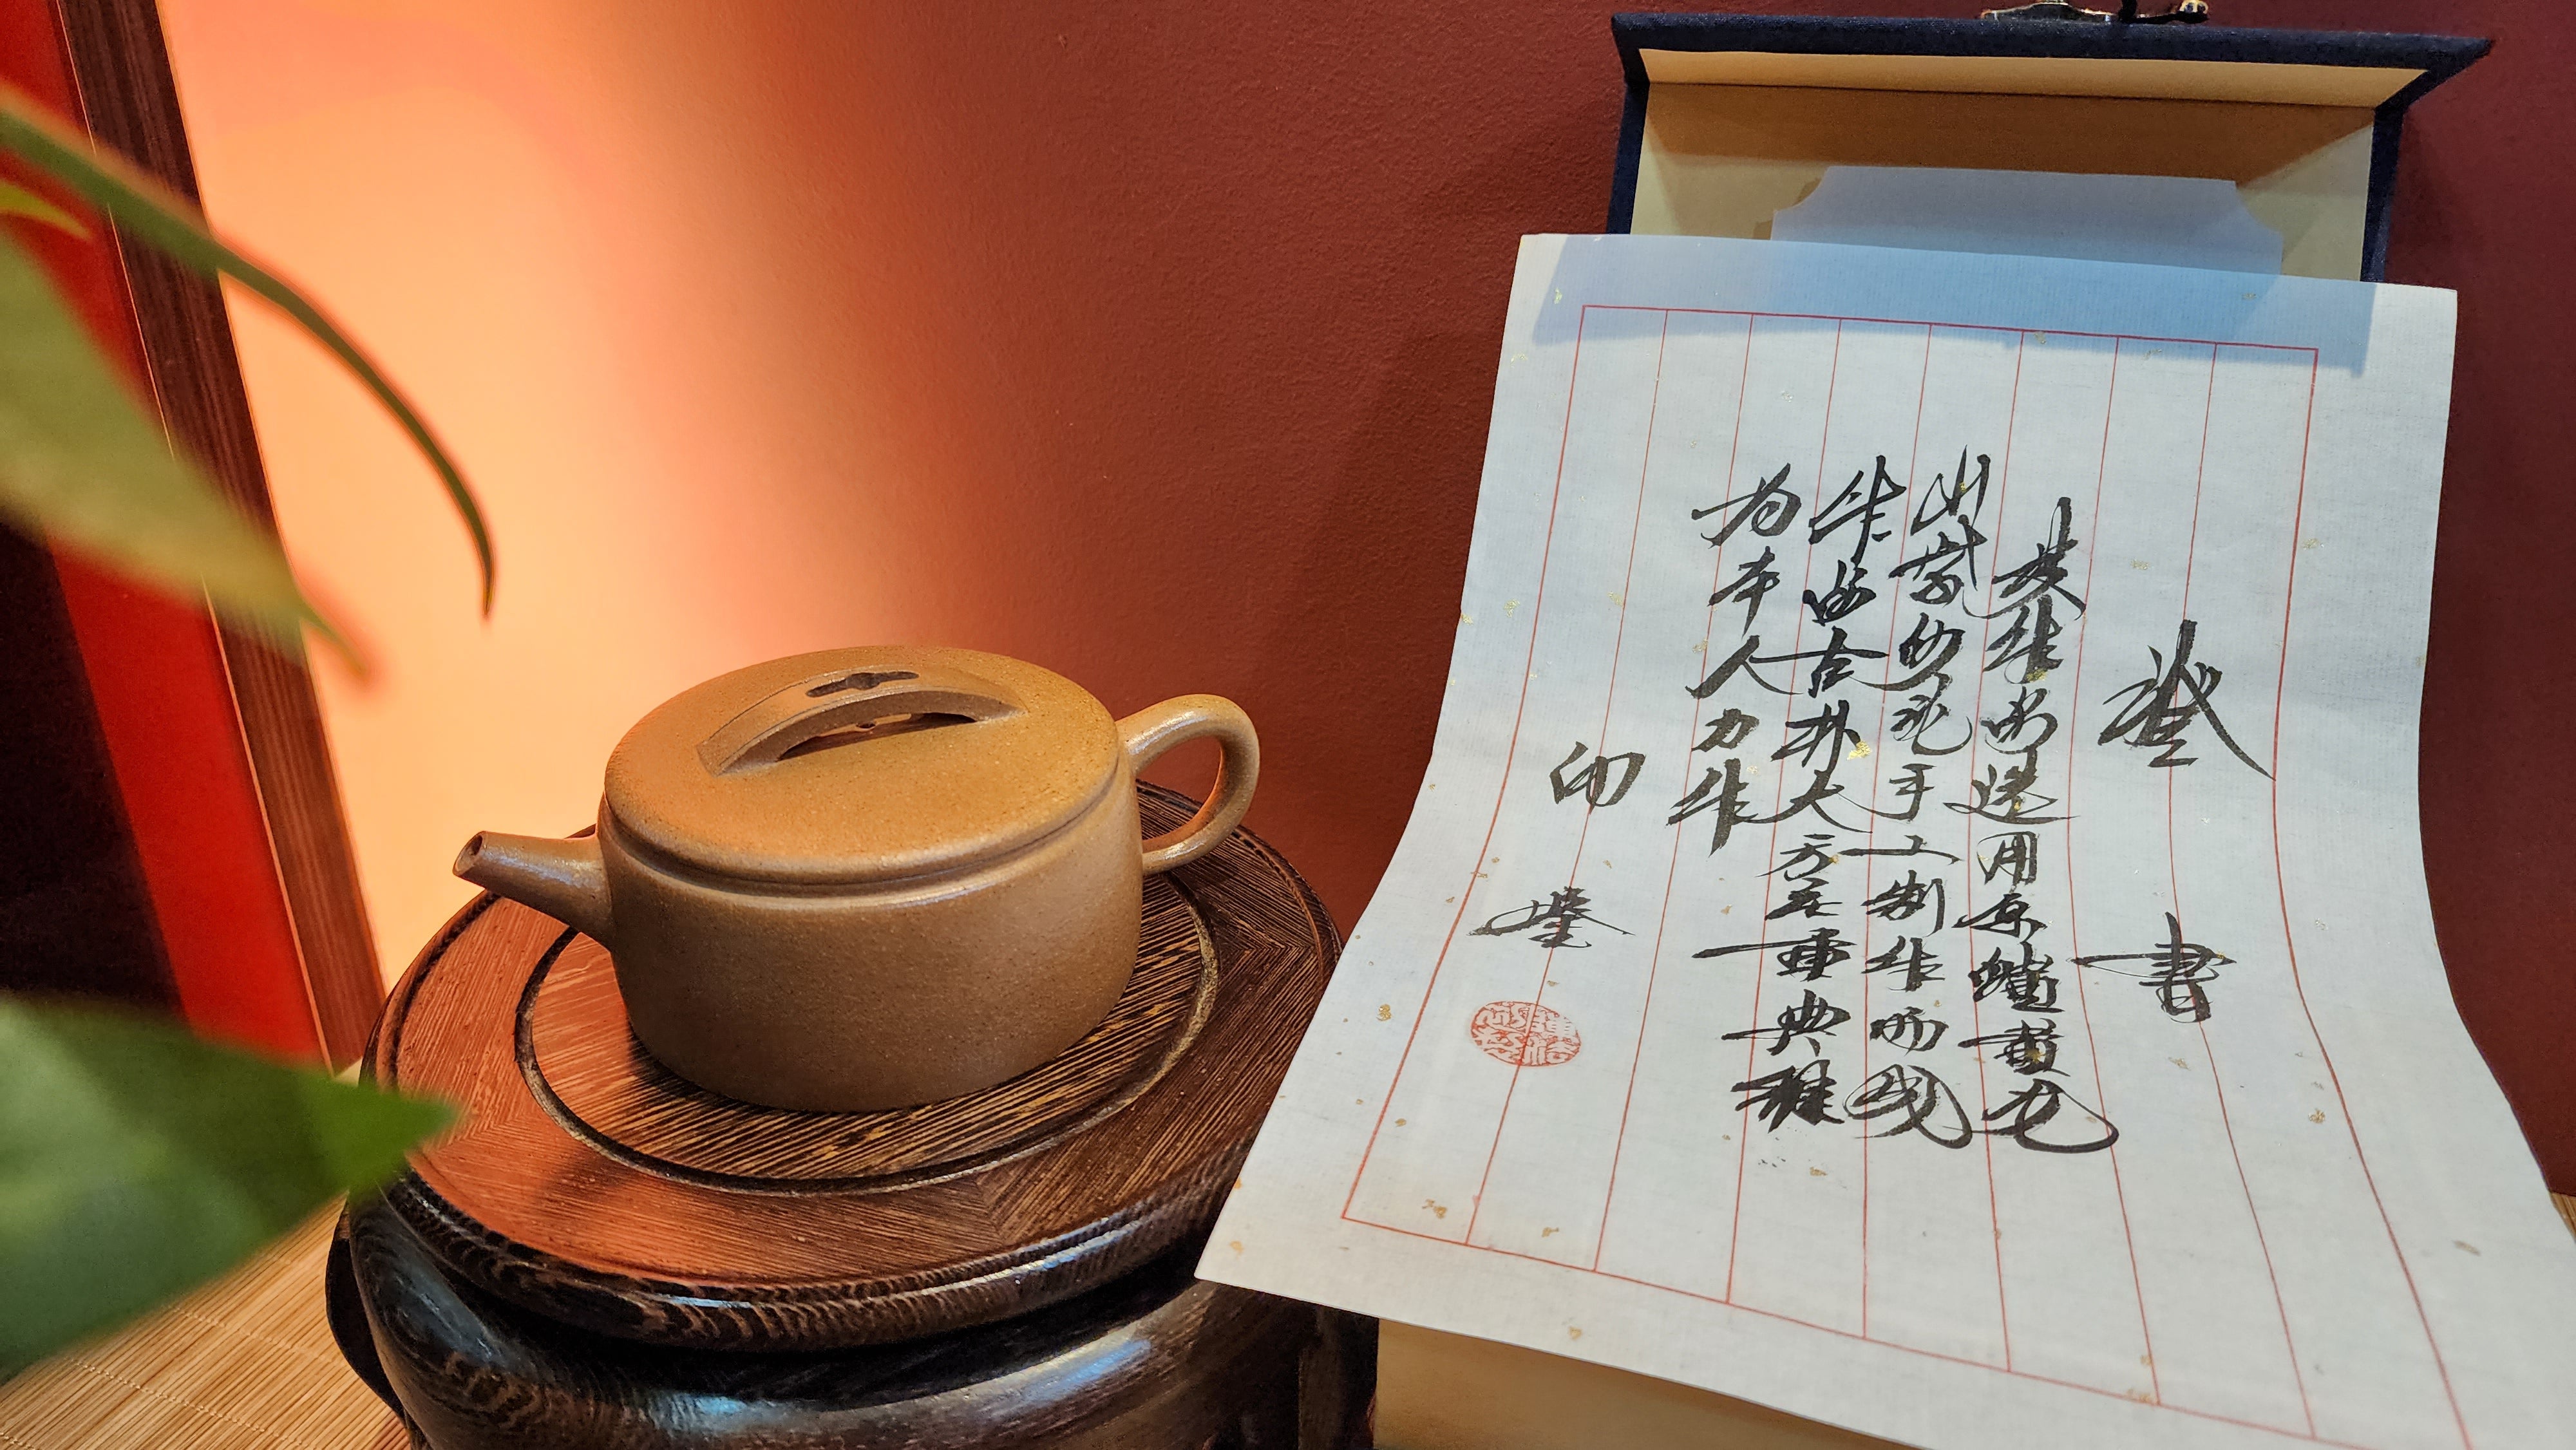 Han Wa 汉瓦 (Special and Difficult to Craft, "Ai Han Wa" 矮汉瓦 version), 211.8ml, Lao Duan Ni 老段泥, by our Collaborative Craftsman Chen Fa Chu 陈法初。